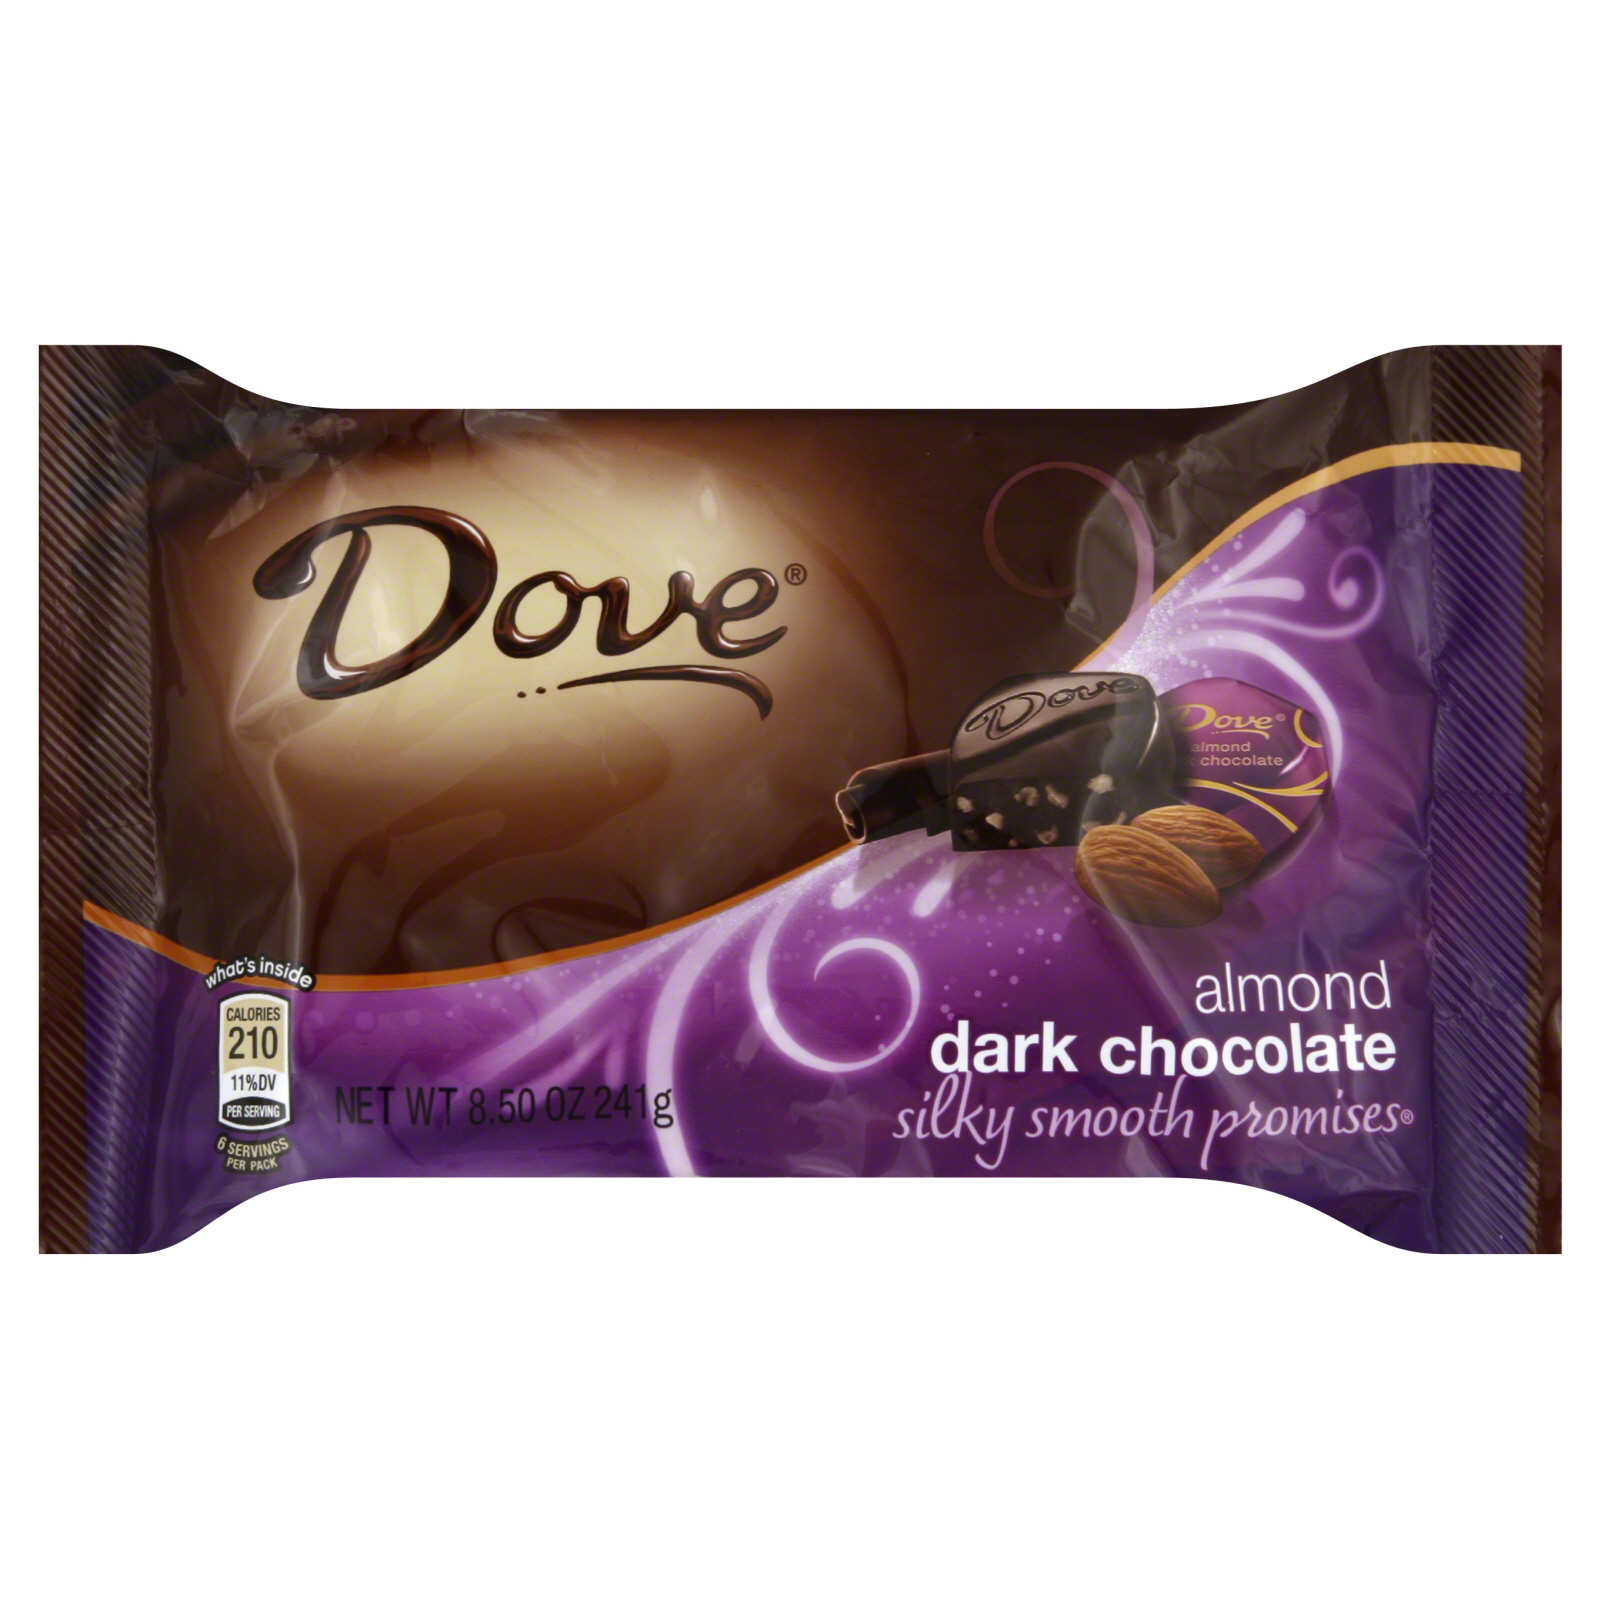 Dove Dark Chocolate Promises, Silky Smooth, Almond, 8.5 oz (241 g)